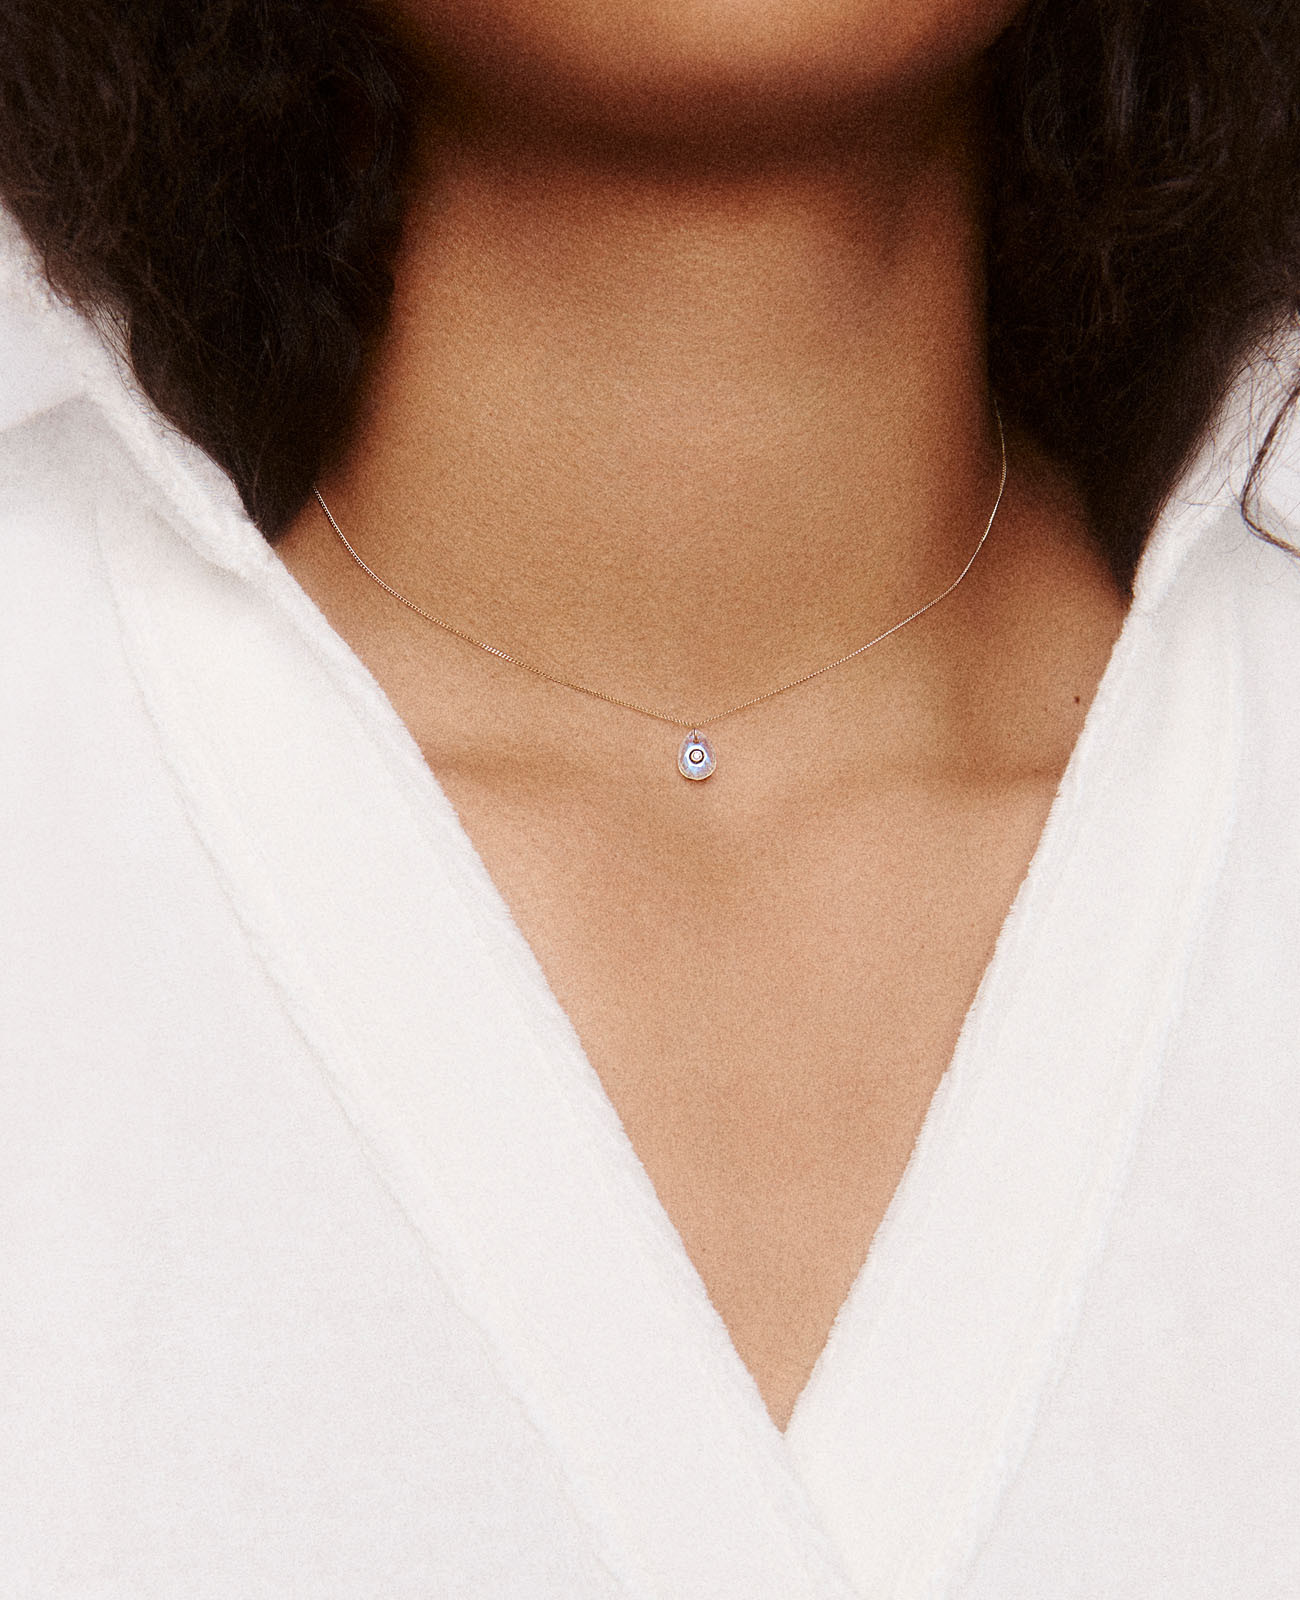 ORSO AQUAMARINE necklace pascale monvoisin jewelry paris